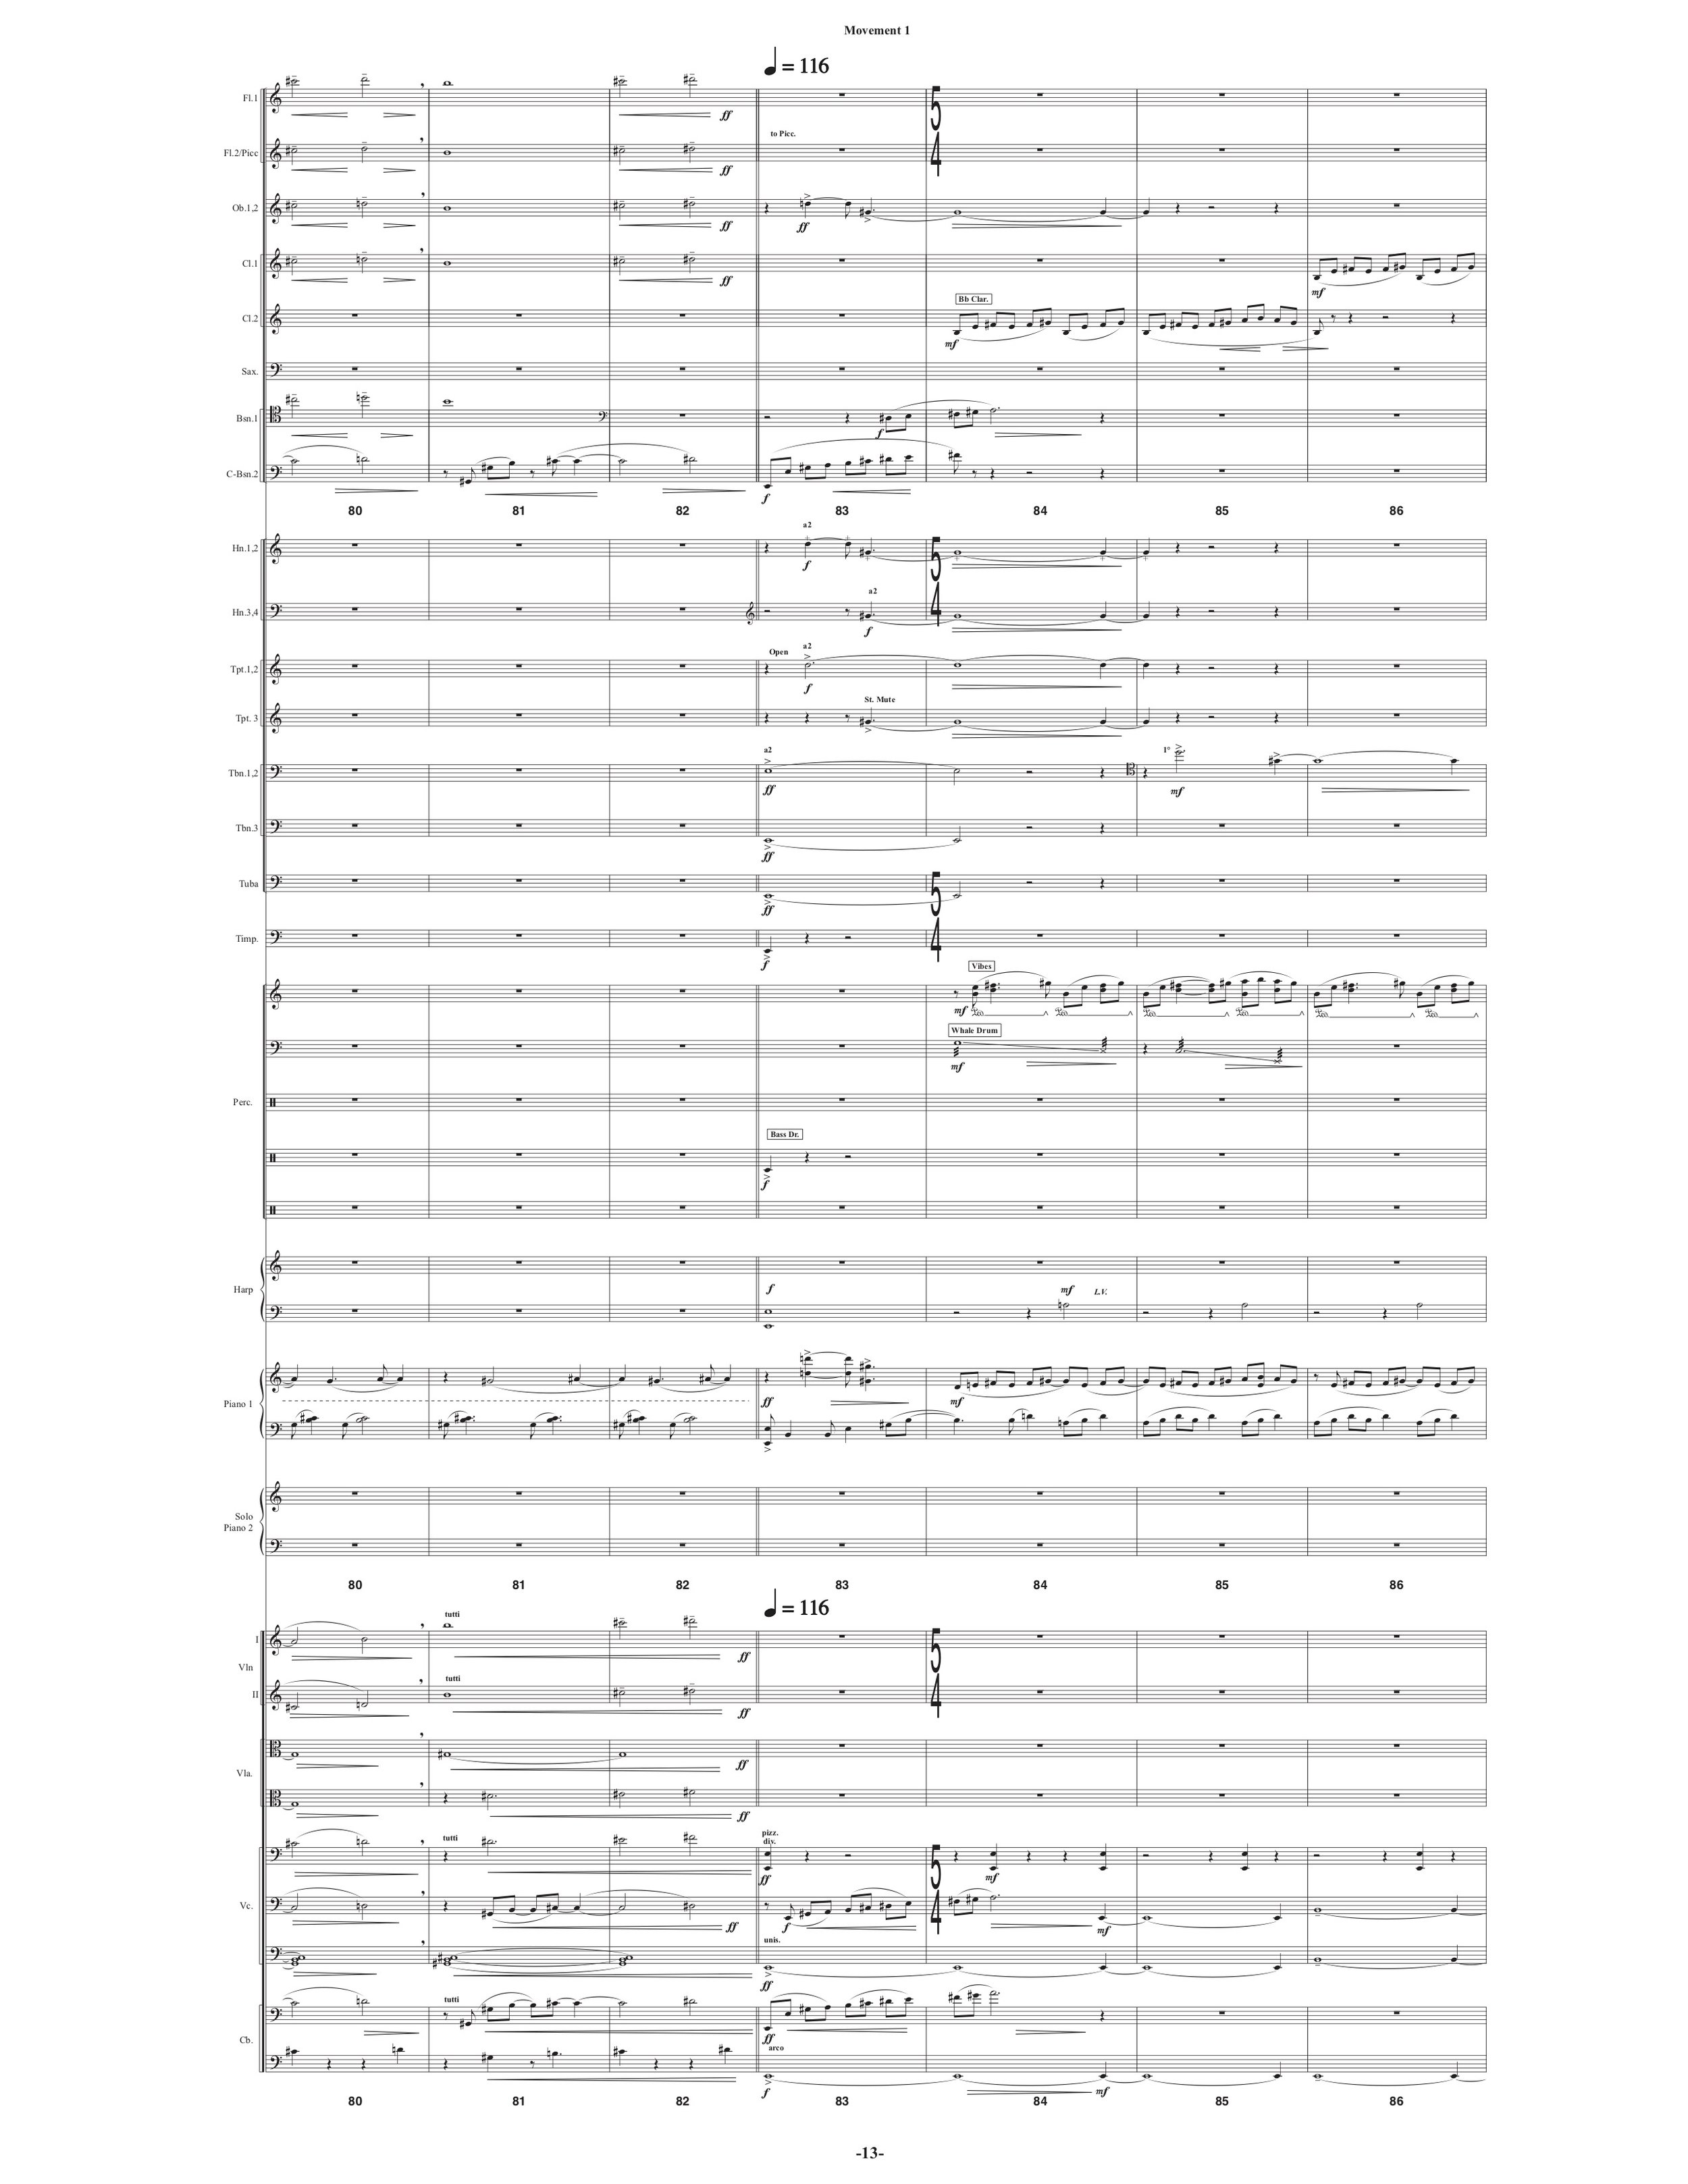 Symphony_Orch & 2 Pianos p18.jpg